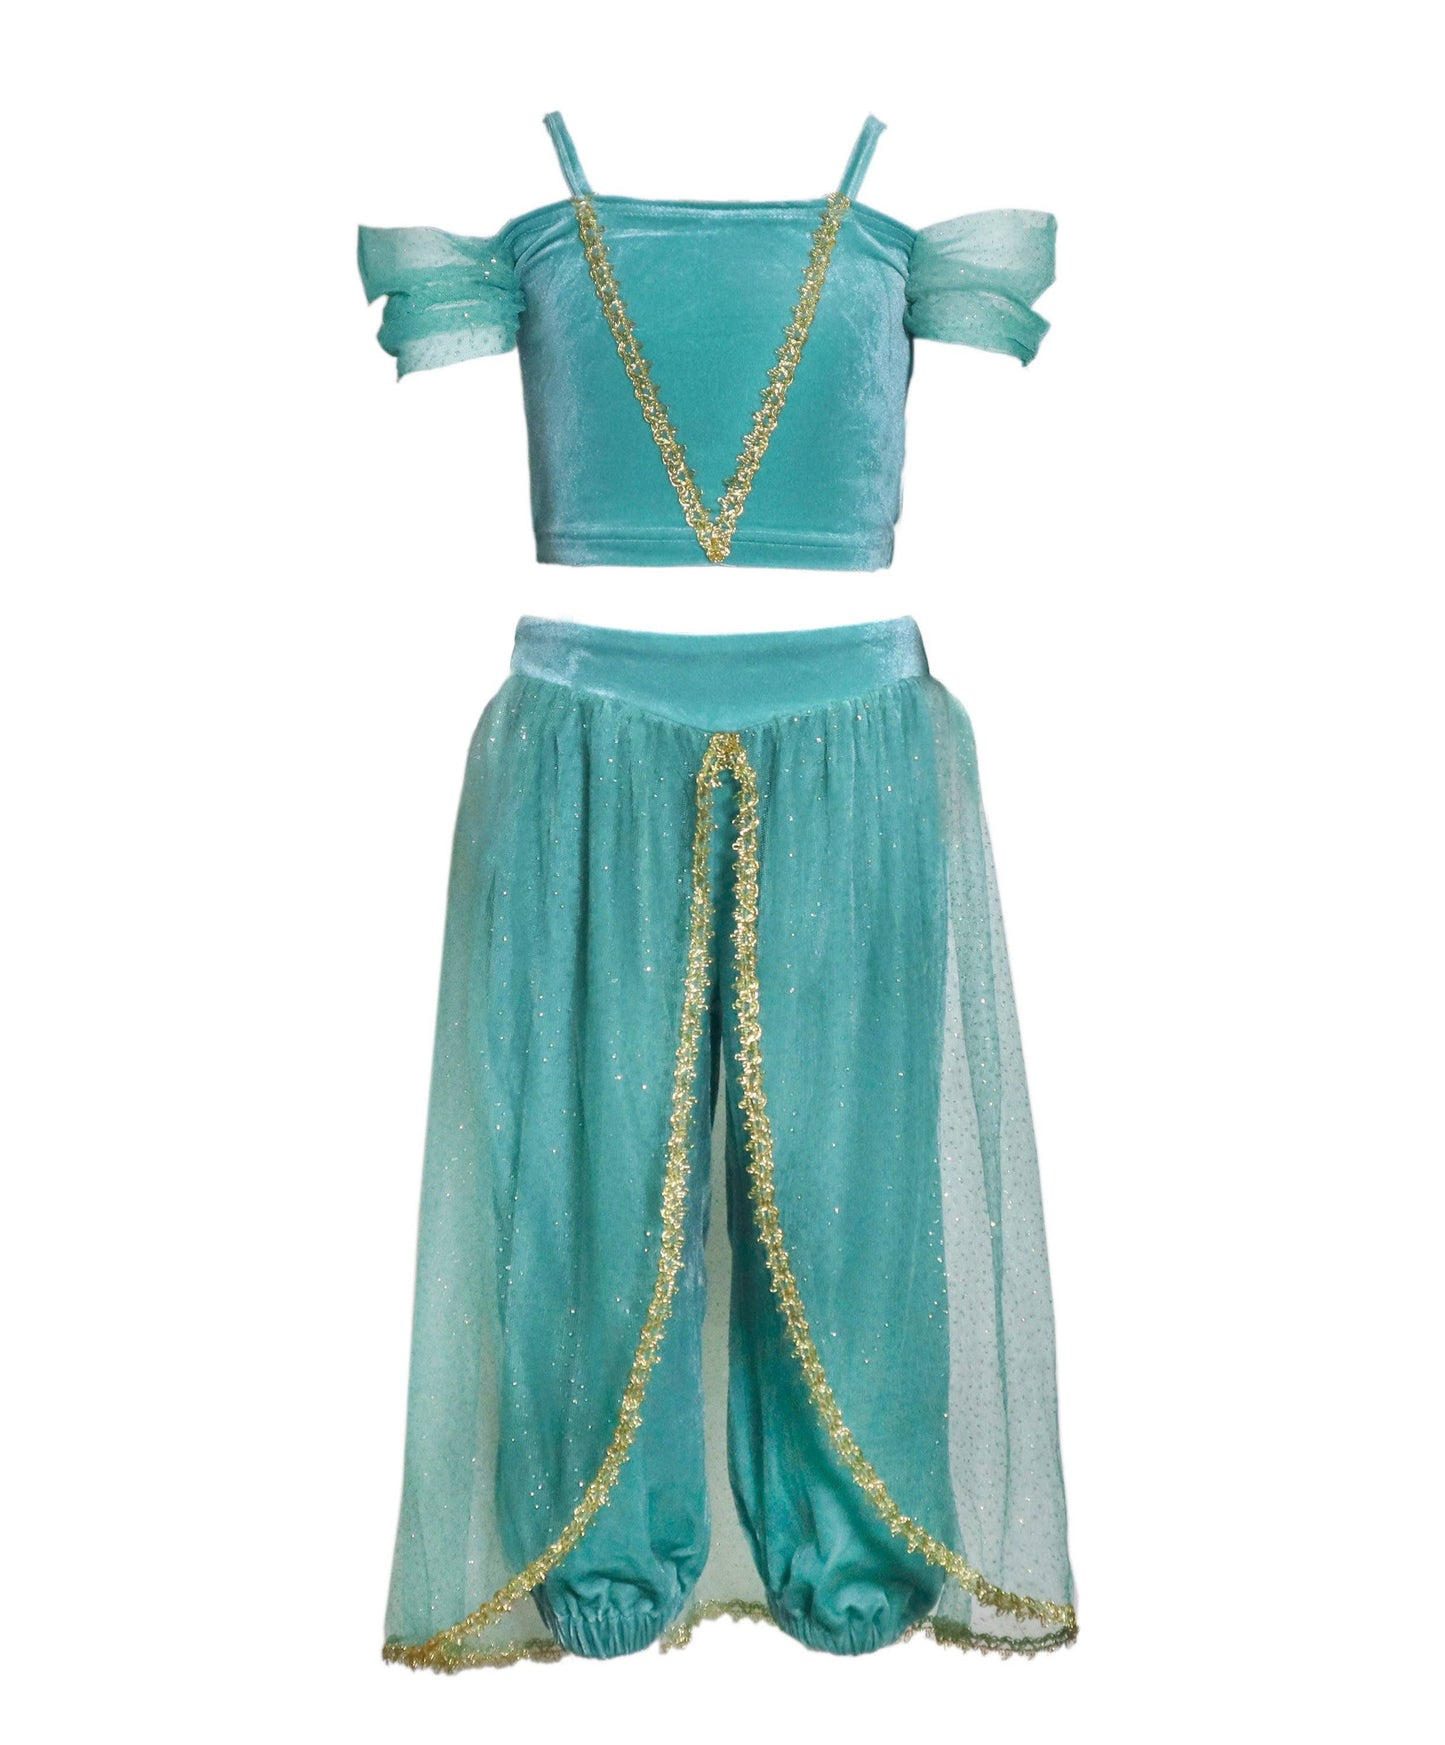 Arabian Princess Costume (S) 4-5 years